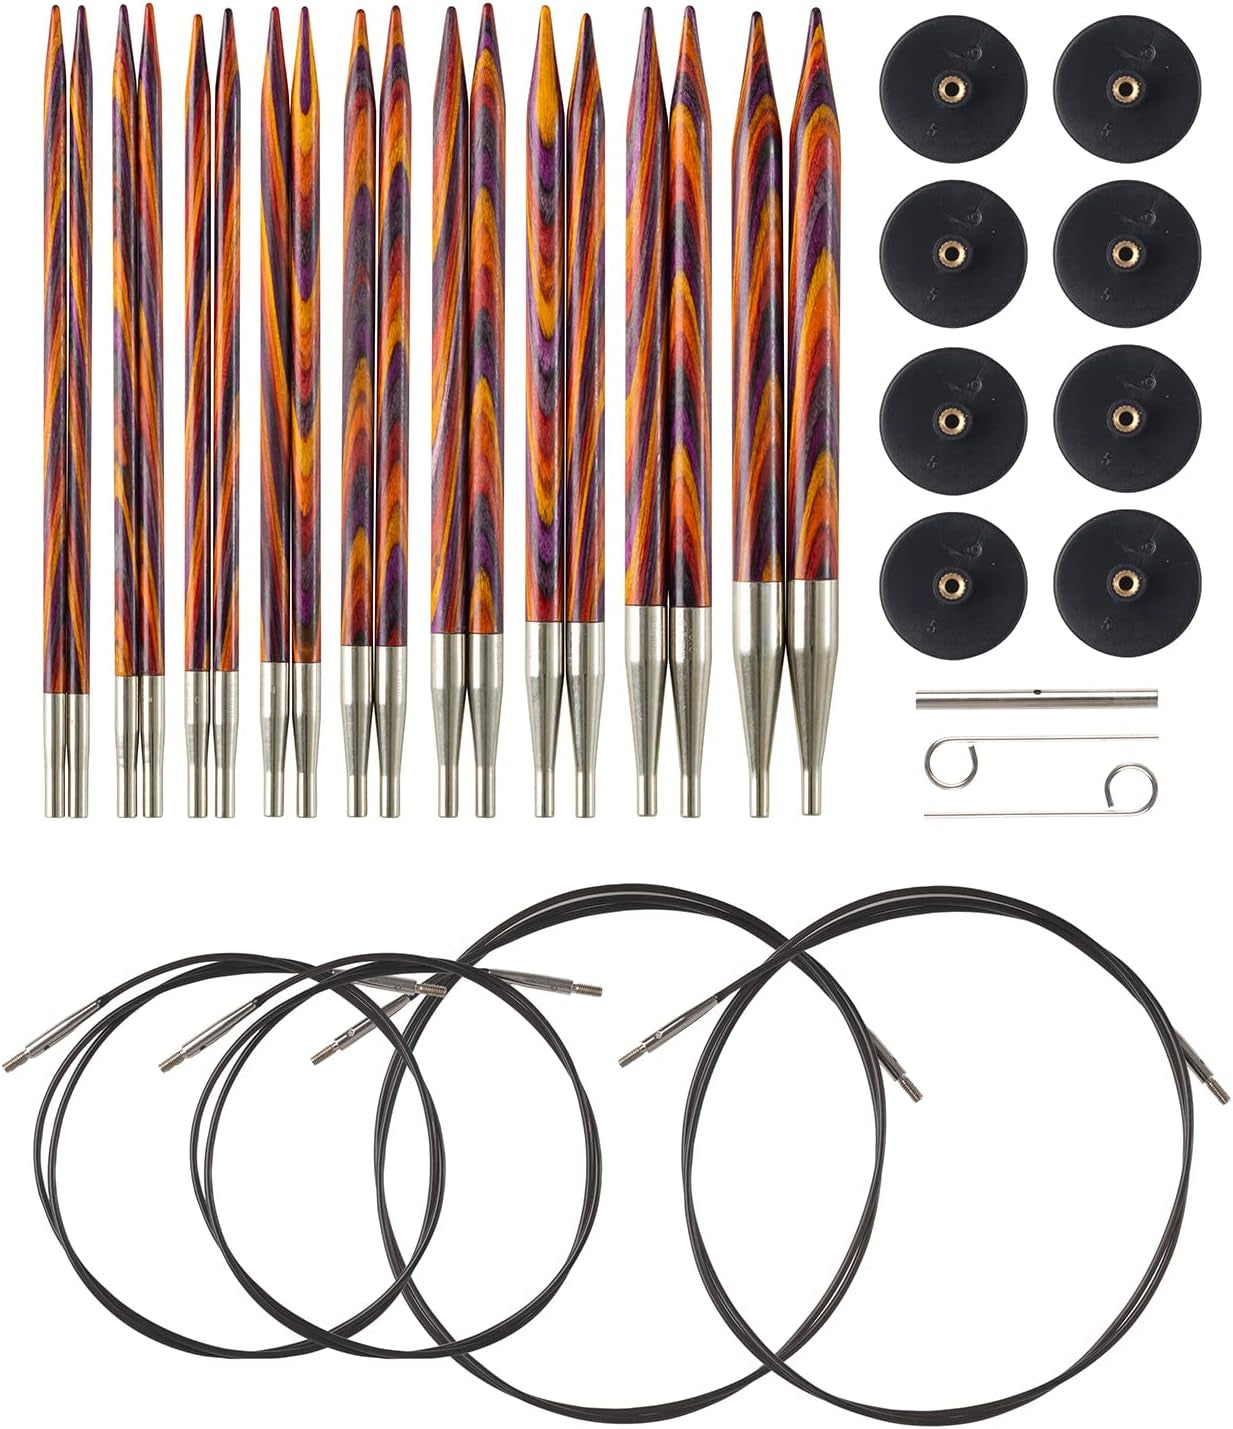 Options Wood Interchangeable Knitting Needle Set - US 4-11 (Rainbow)